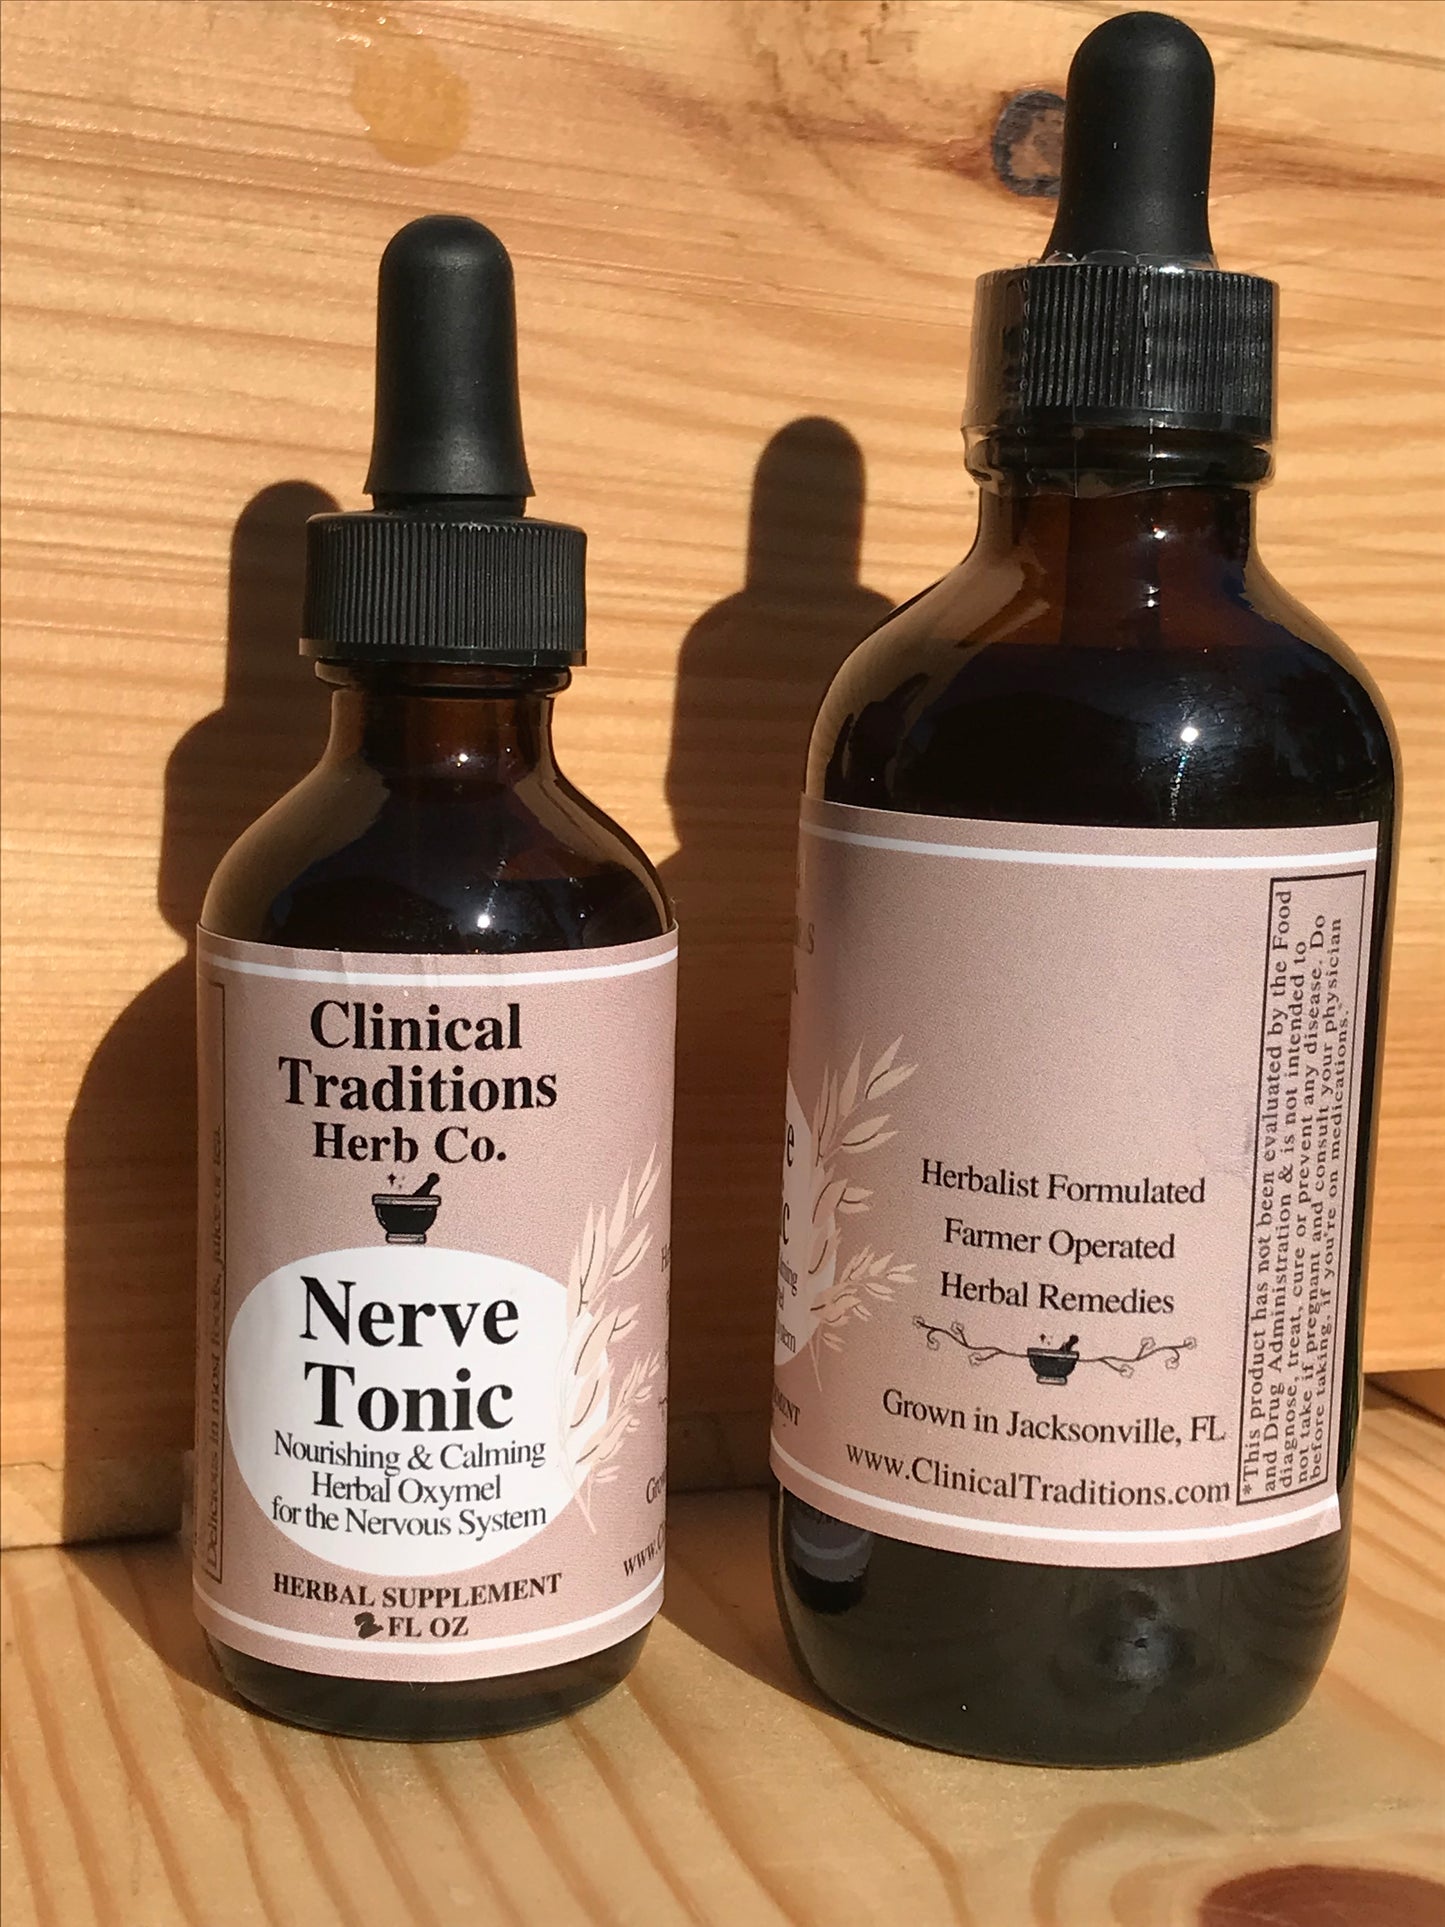 Nerve Tonic: an Herbal Vinegar supplement for the Nervous System